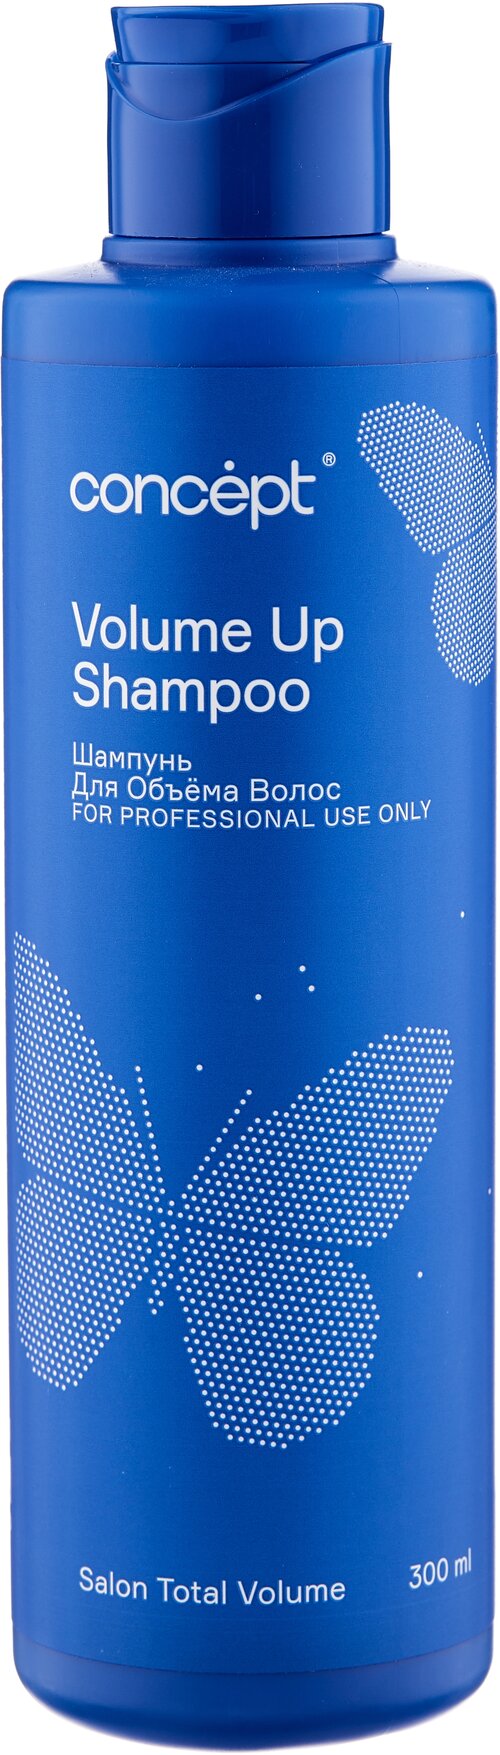 Concept шампунь Salon Total Volume Up для объема волос, 300 мл